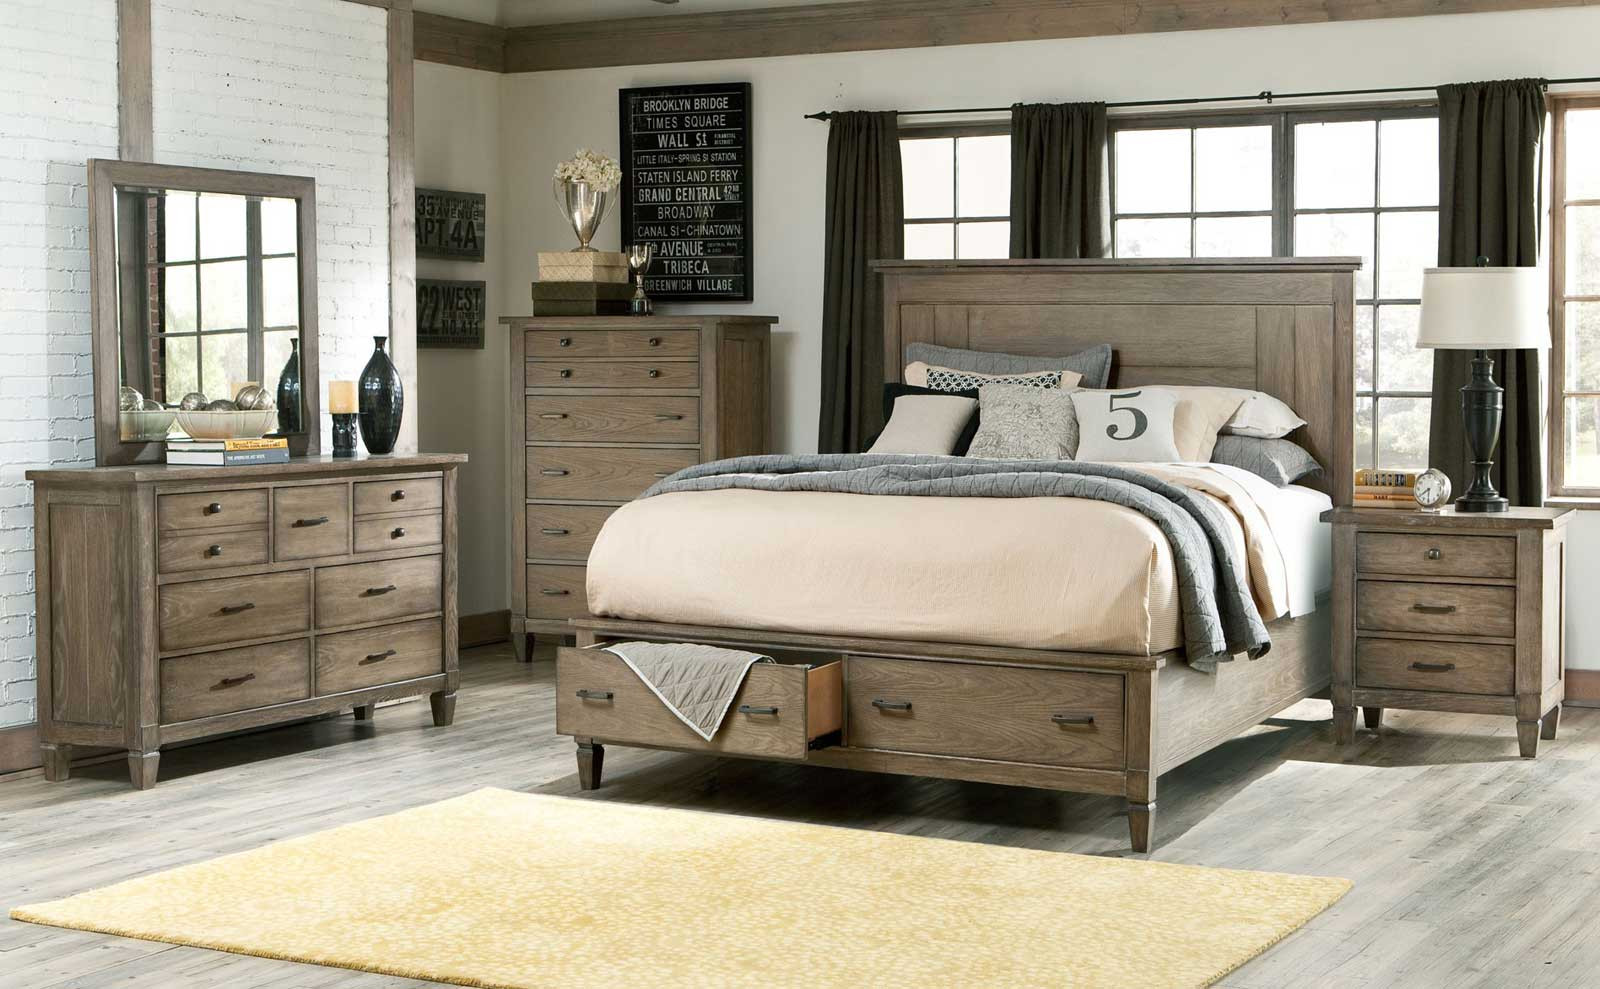 Rustic Wood Bedroom Furniture
 Bedroom Remarkable Rustic Bedroom Sets Design For Bedroom